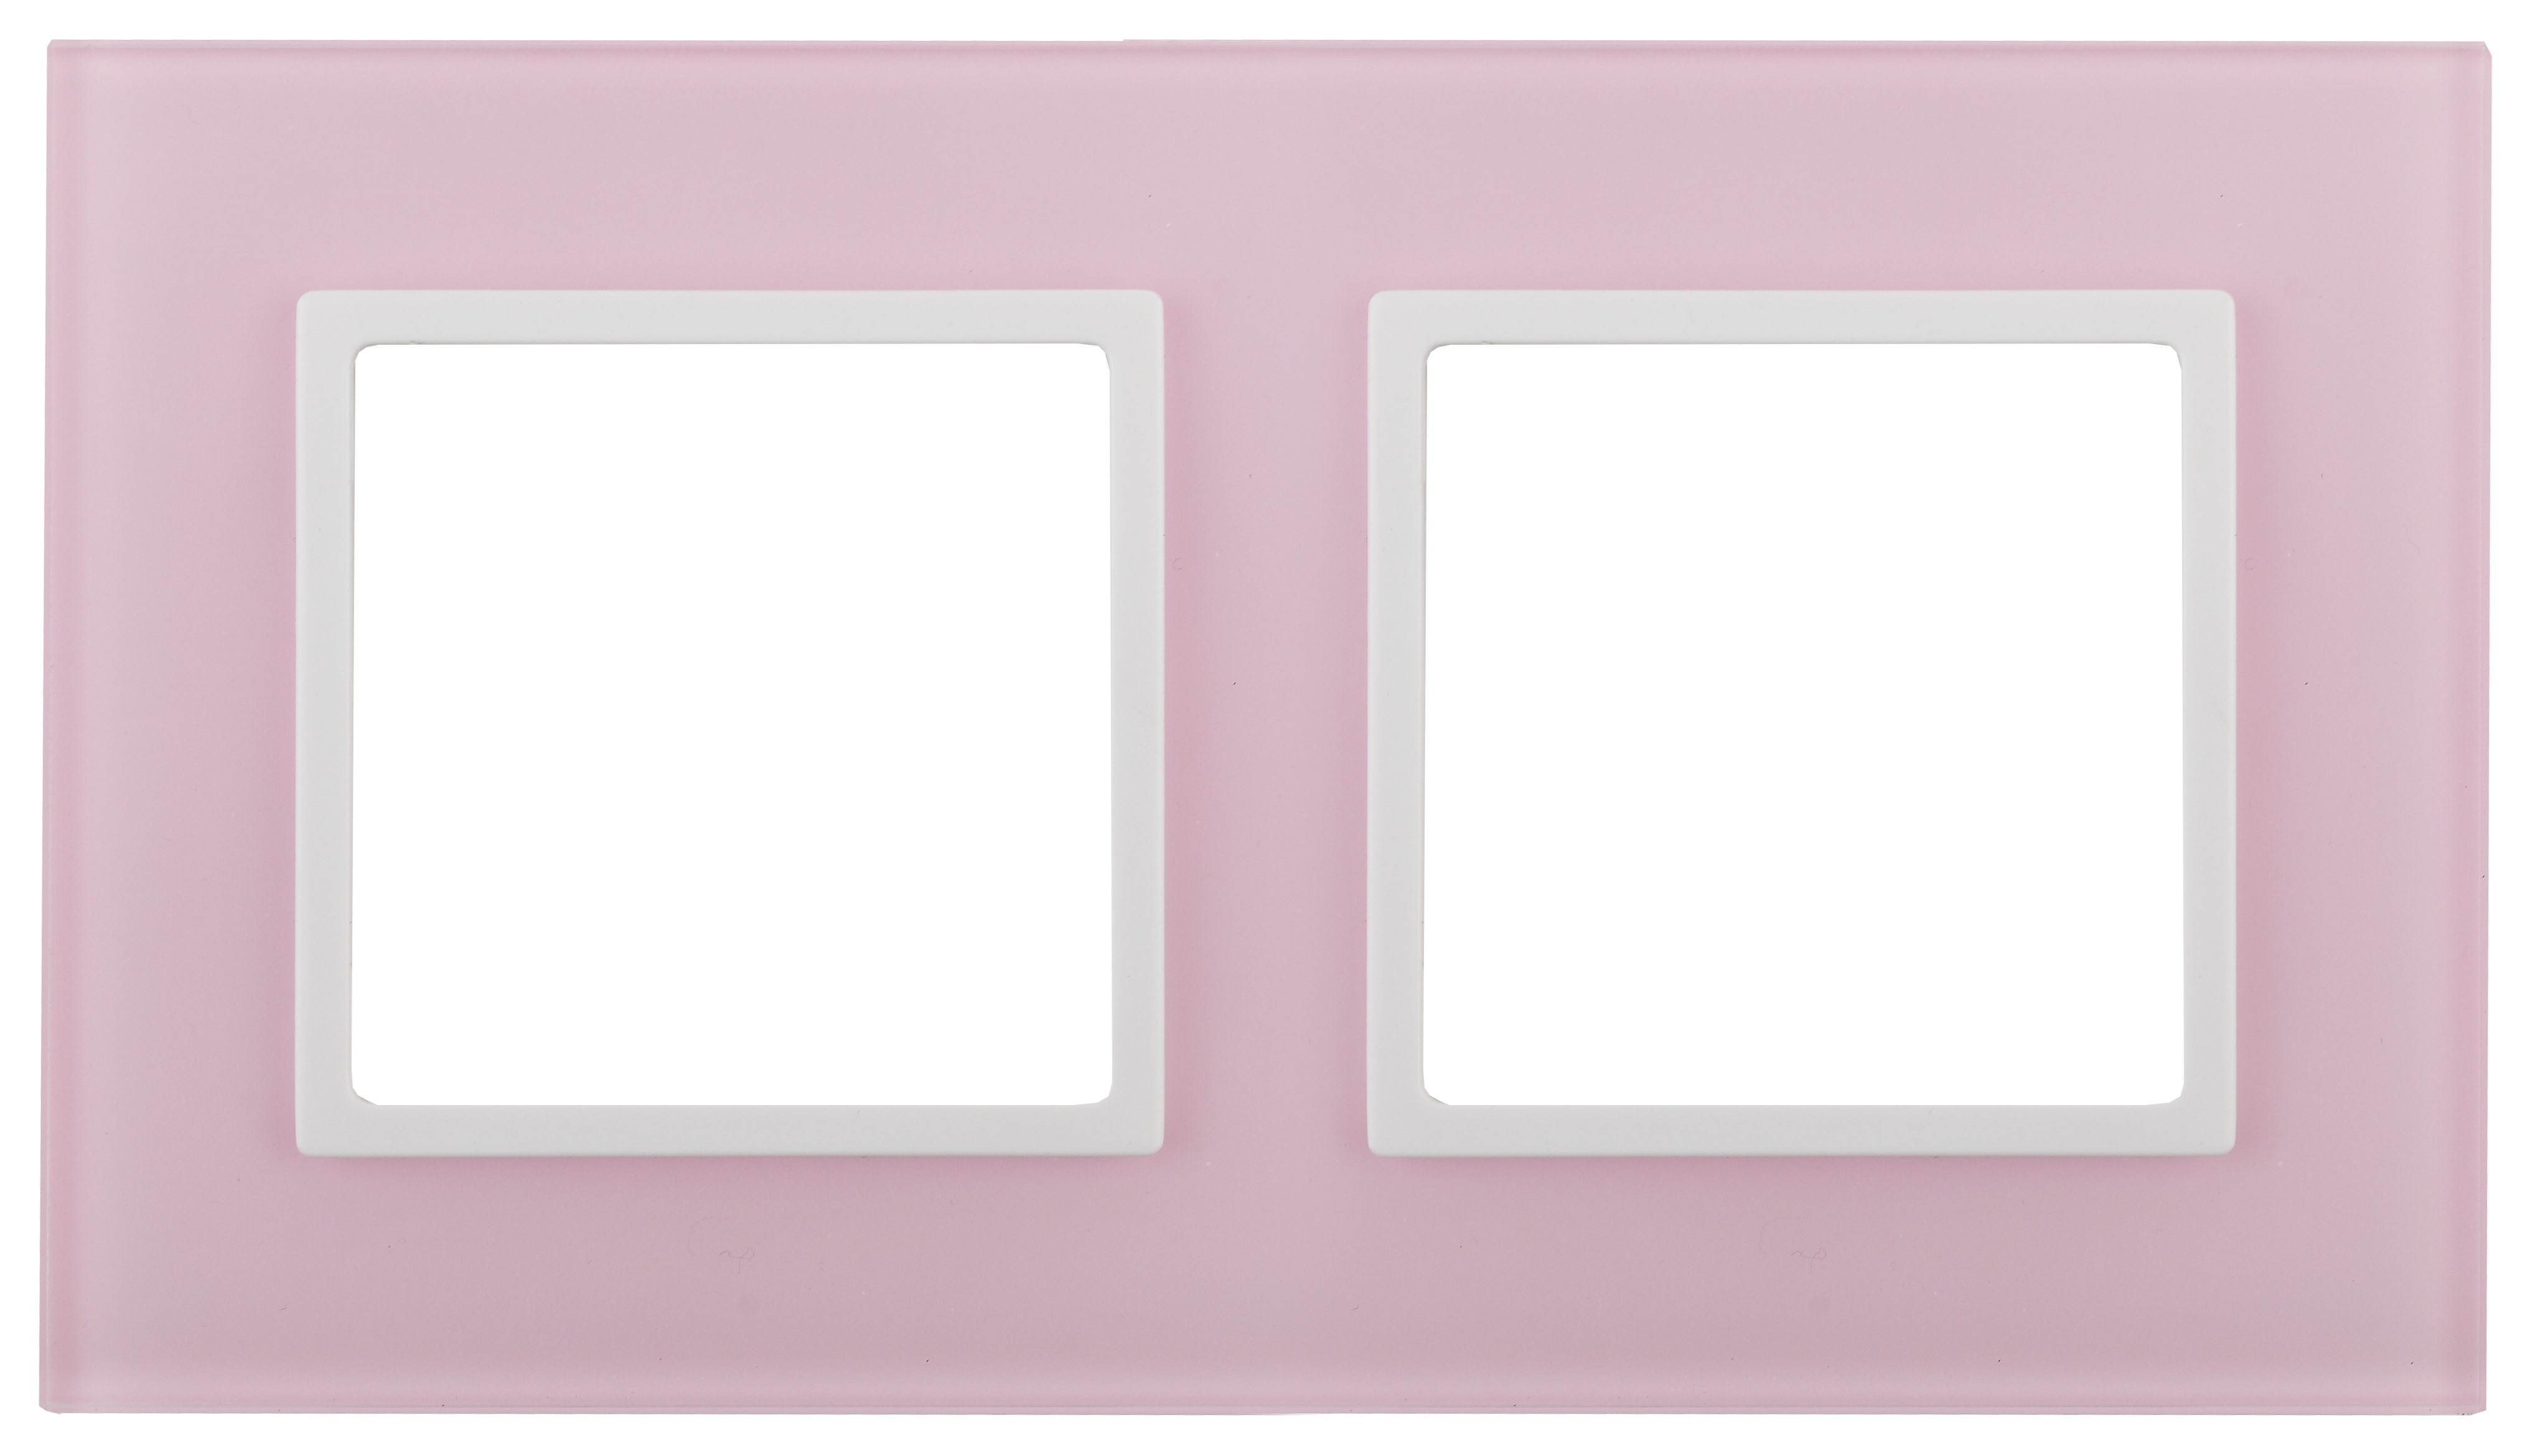 14-5102-30 ЭРА Рамка на 2 поста, стекло, Эра Elegance, розовый+бел (5/50/1200)